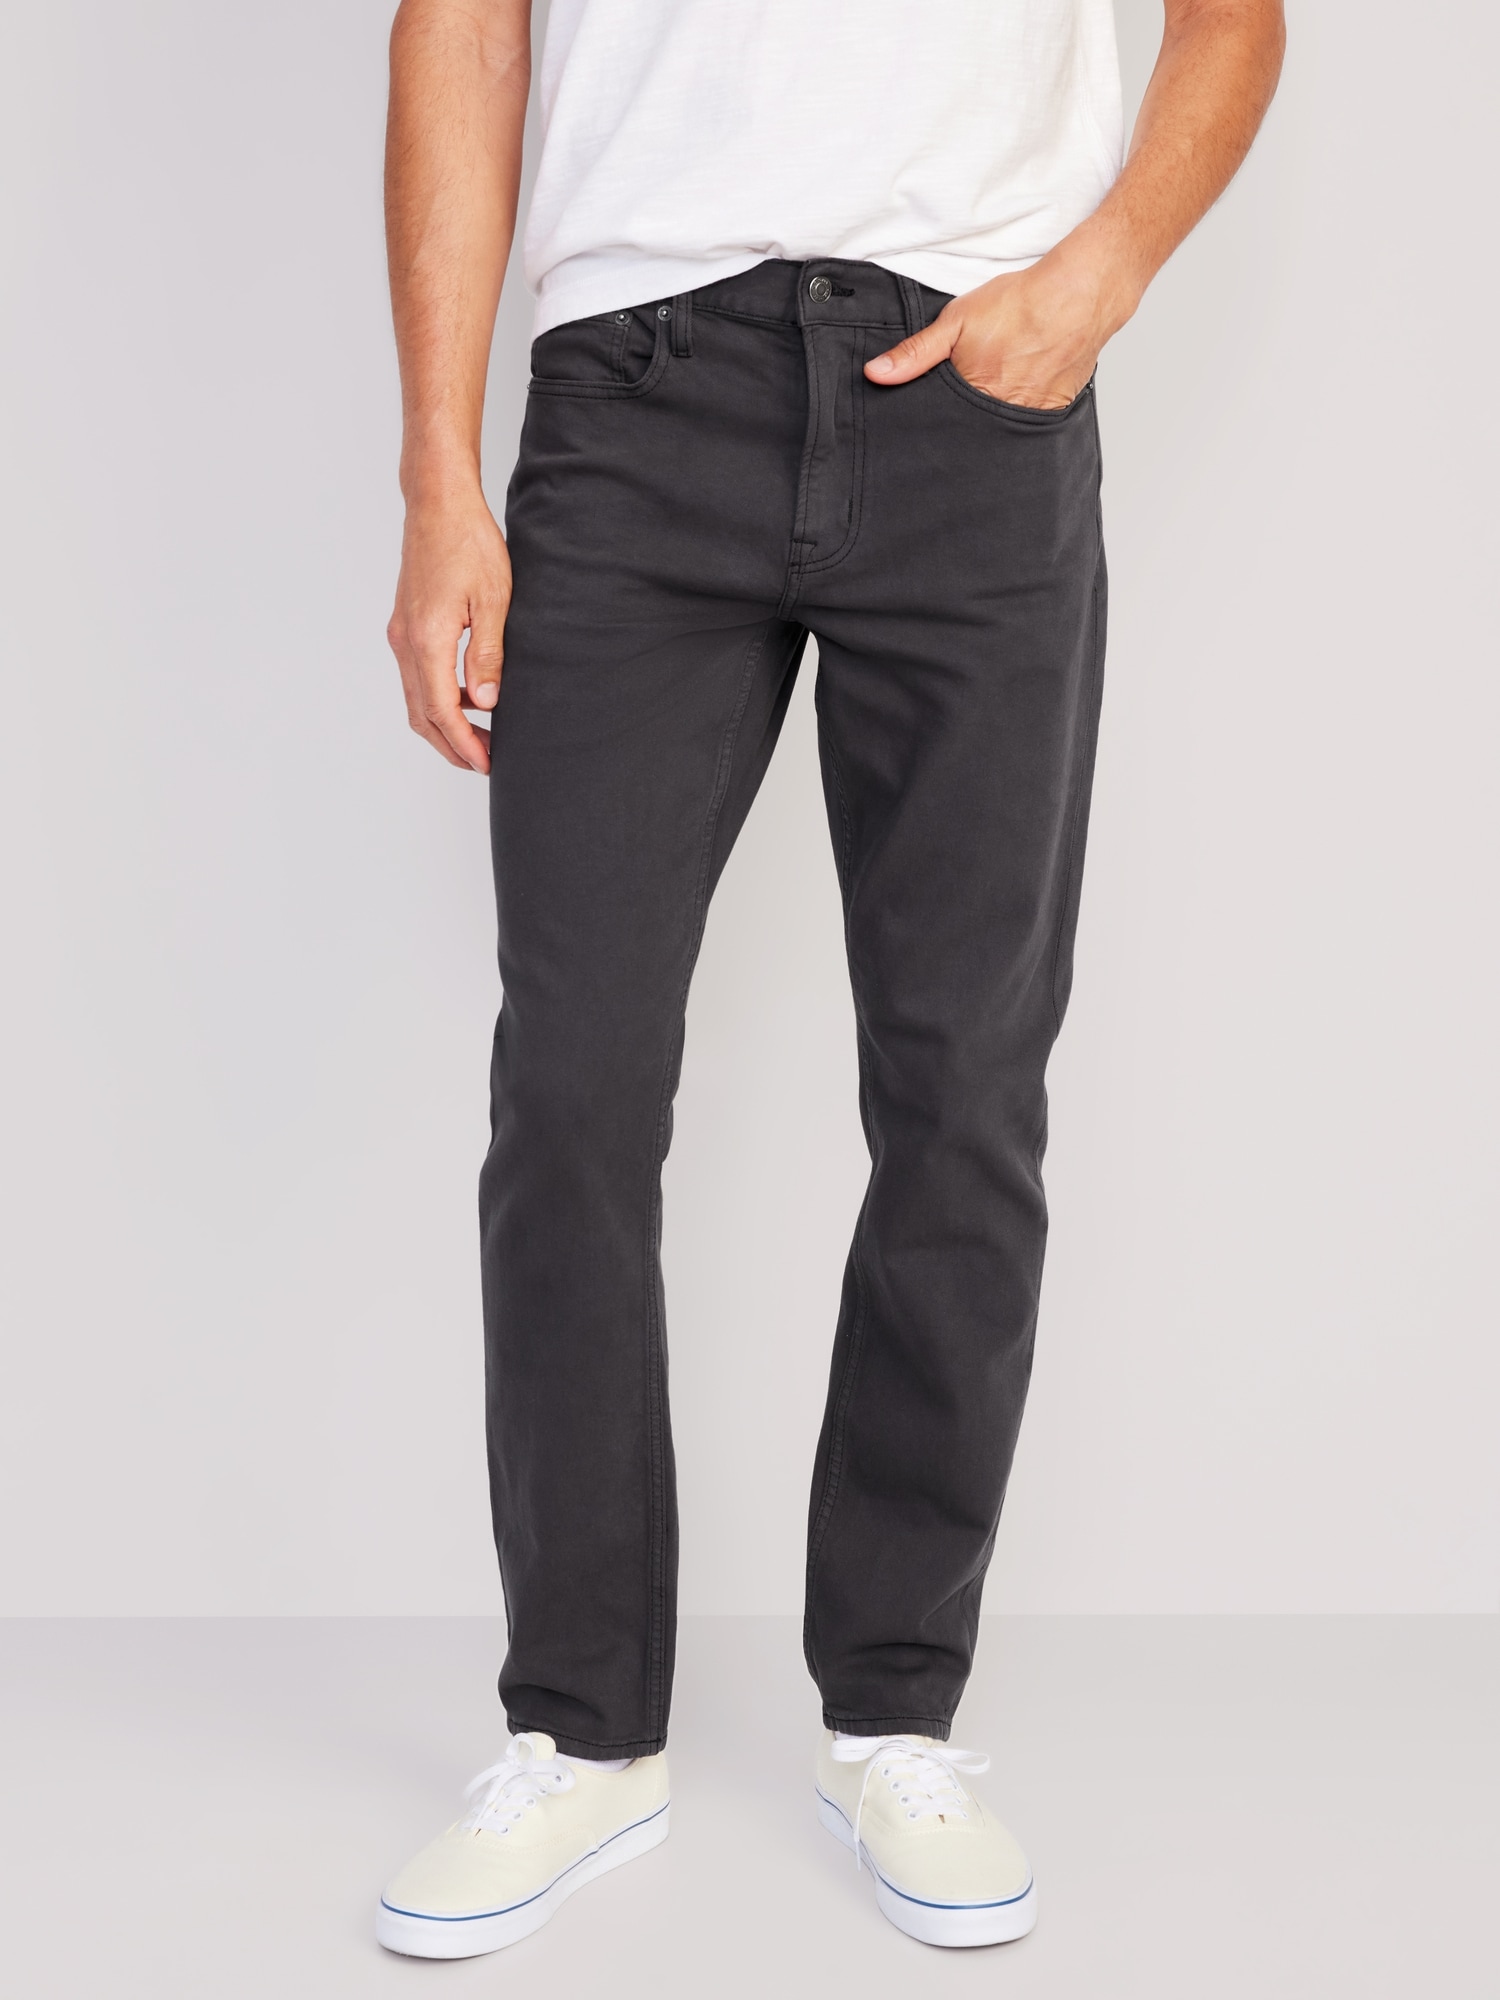 Buy Men Grey Light Slim Fit Jeans Online - 747319